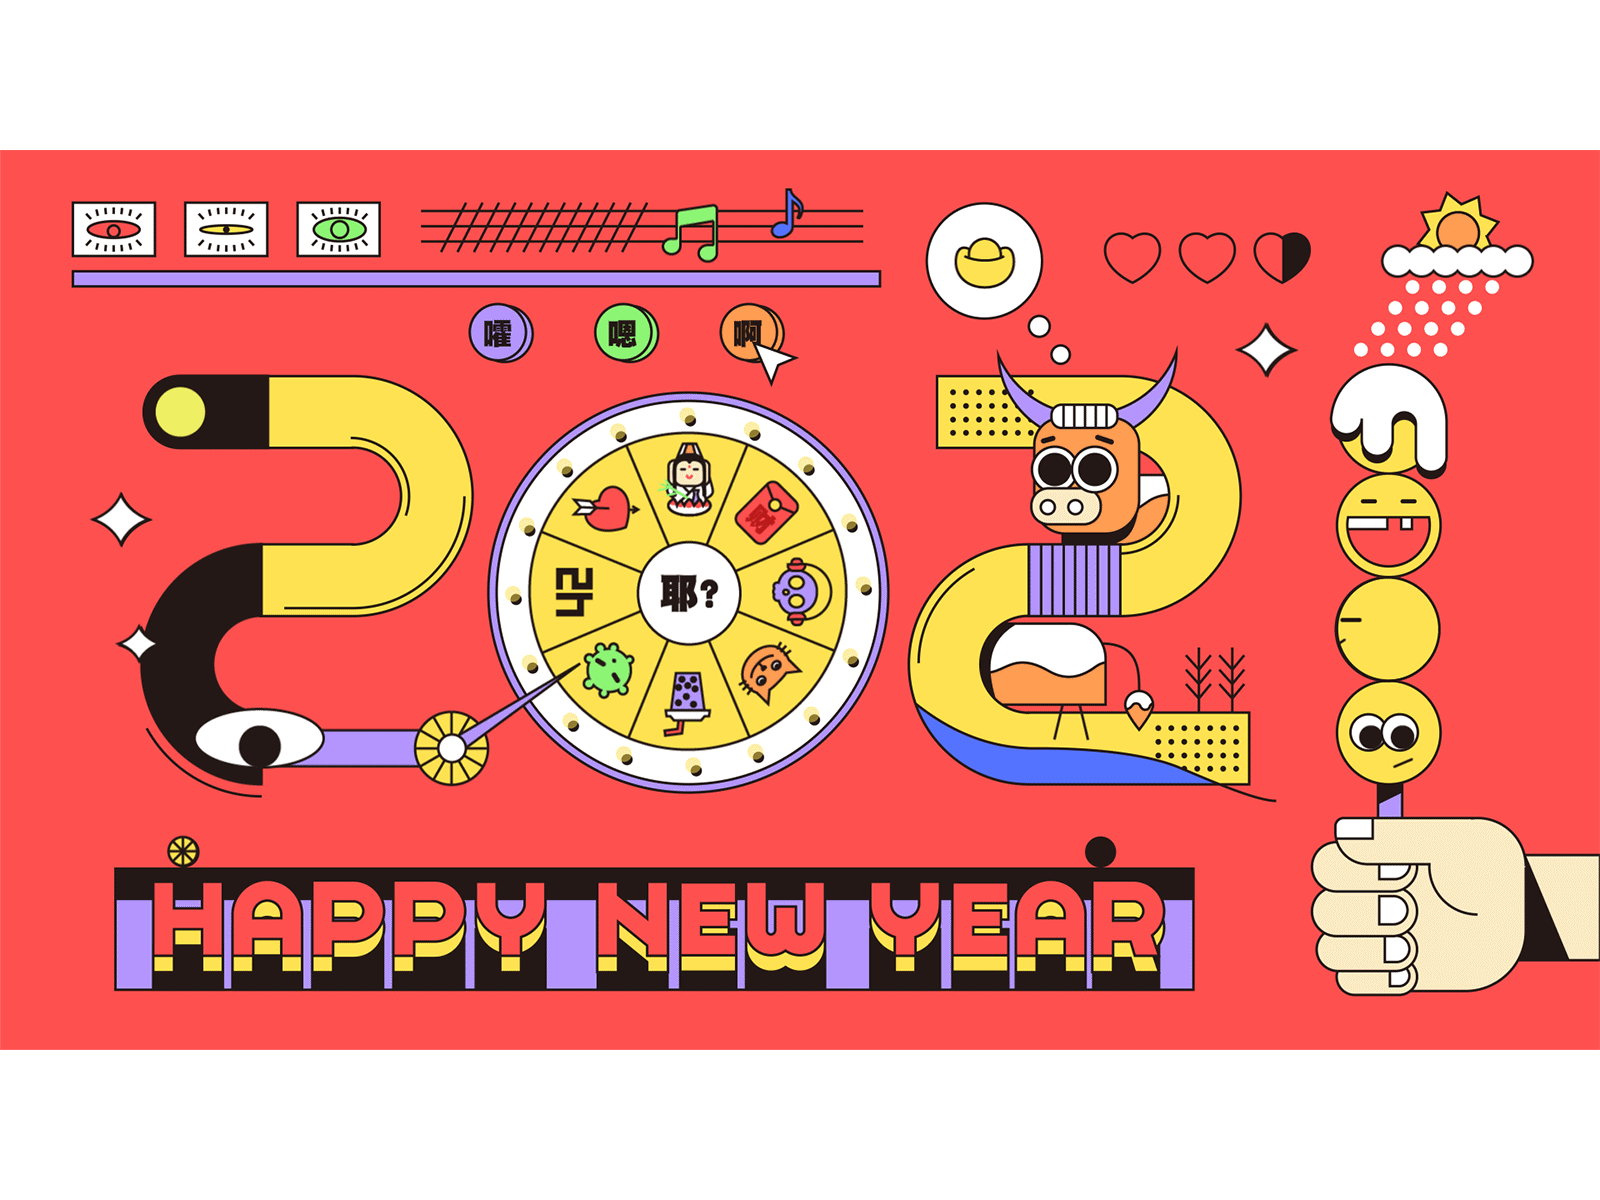 2021 HAPPY NEW YEAR 2021 gif gif animated happy new year interesting